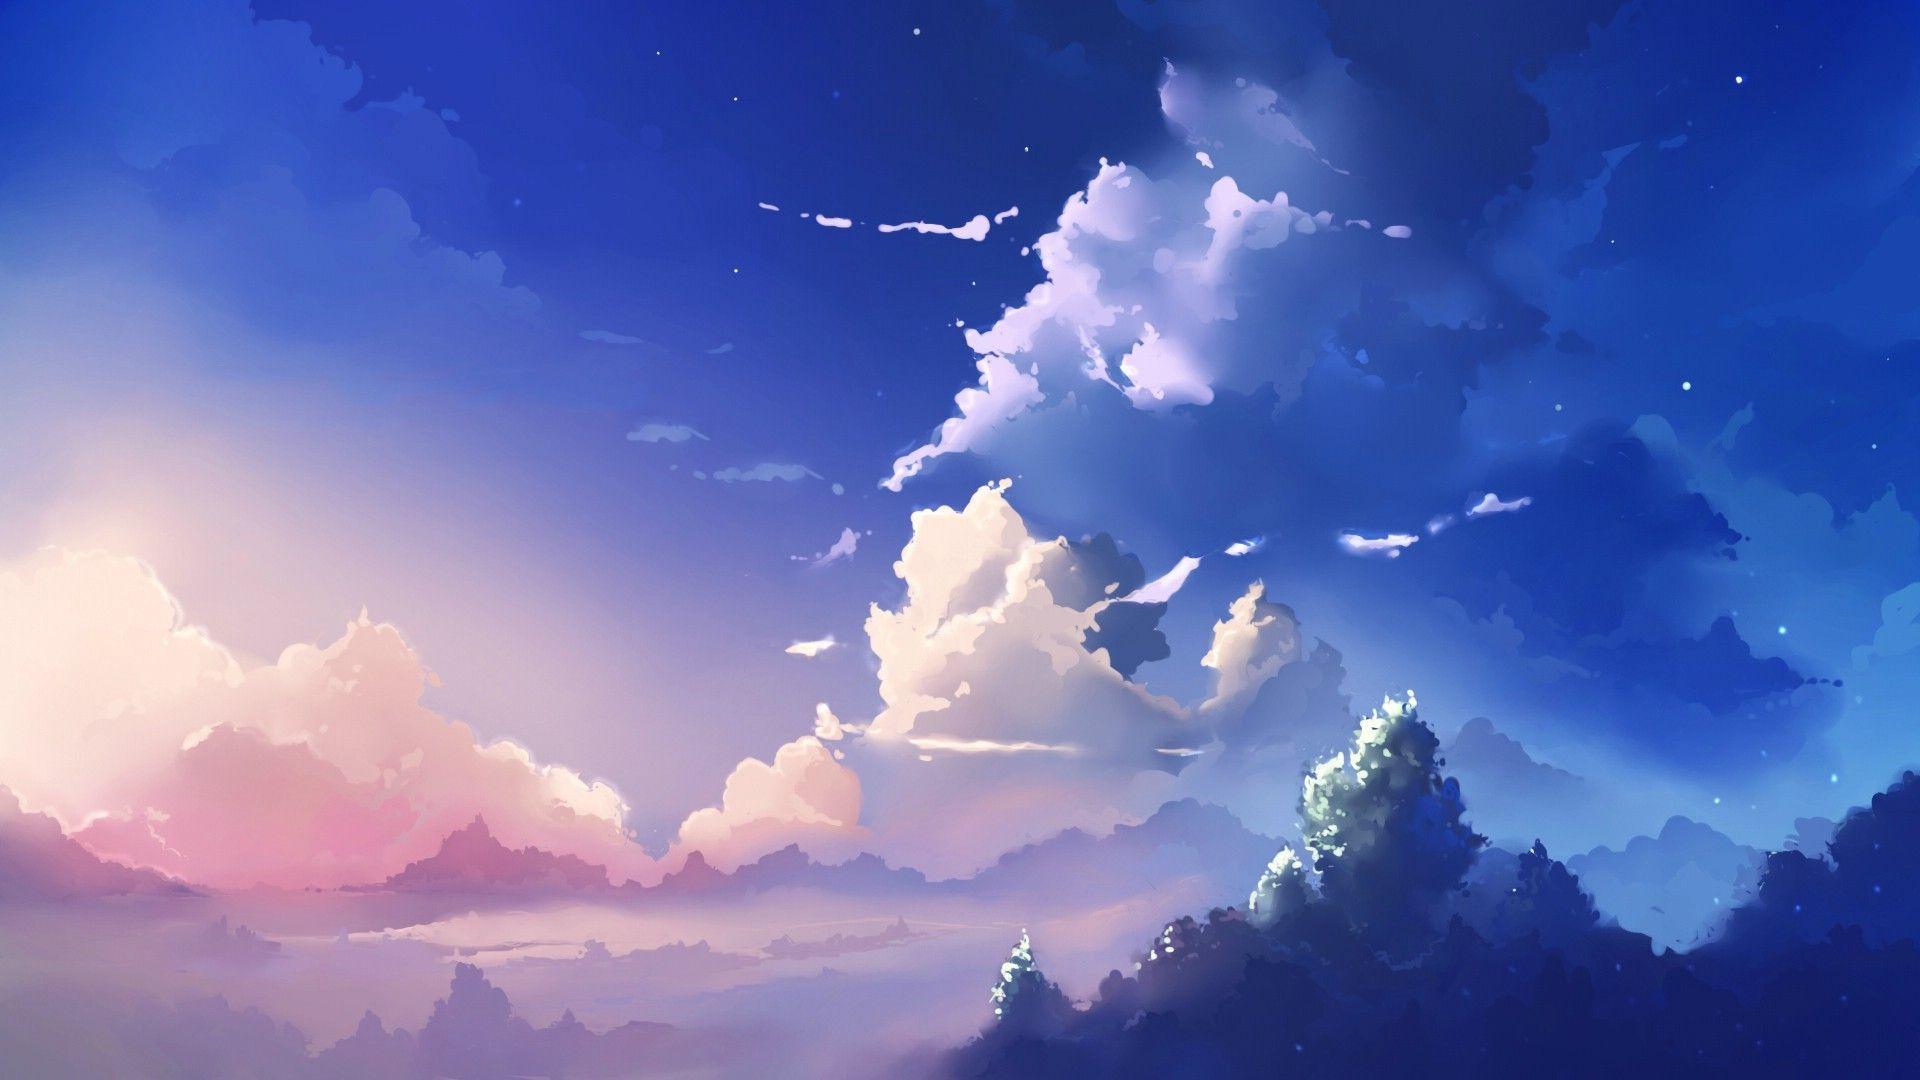 Anime Night Sky Wallpaper 2020